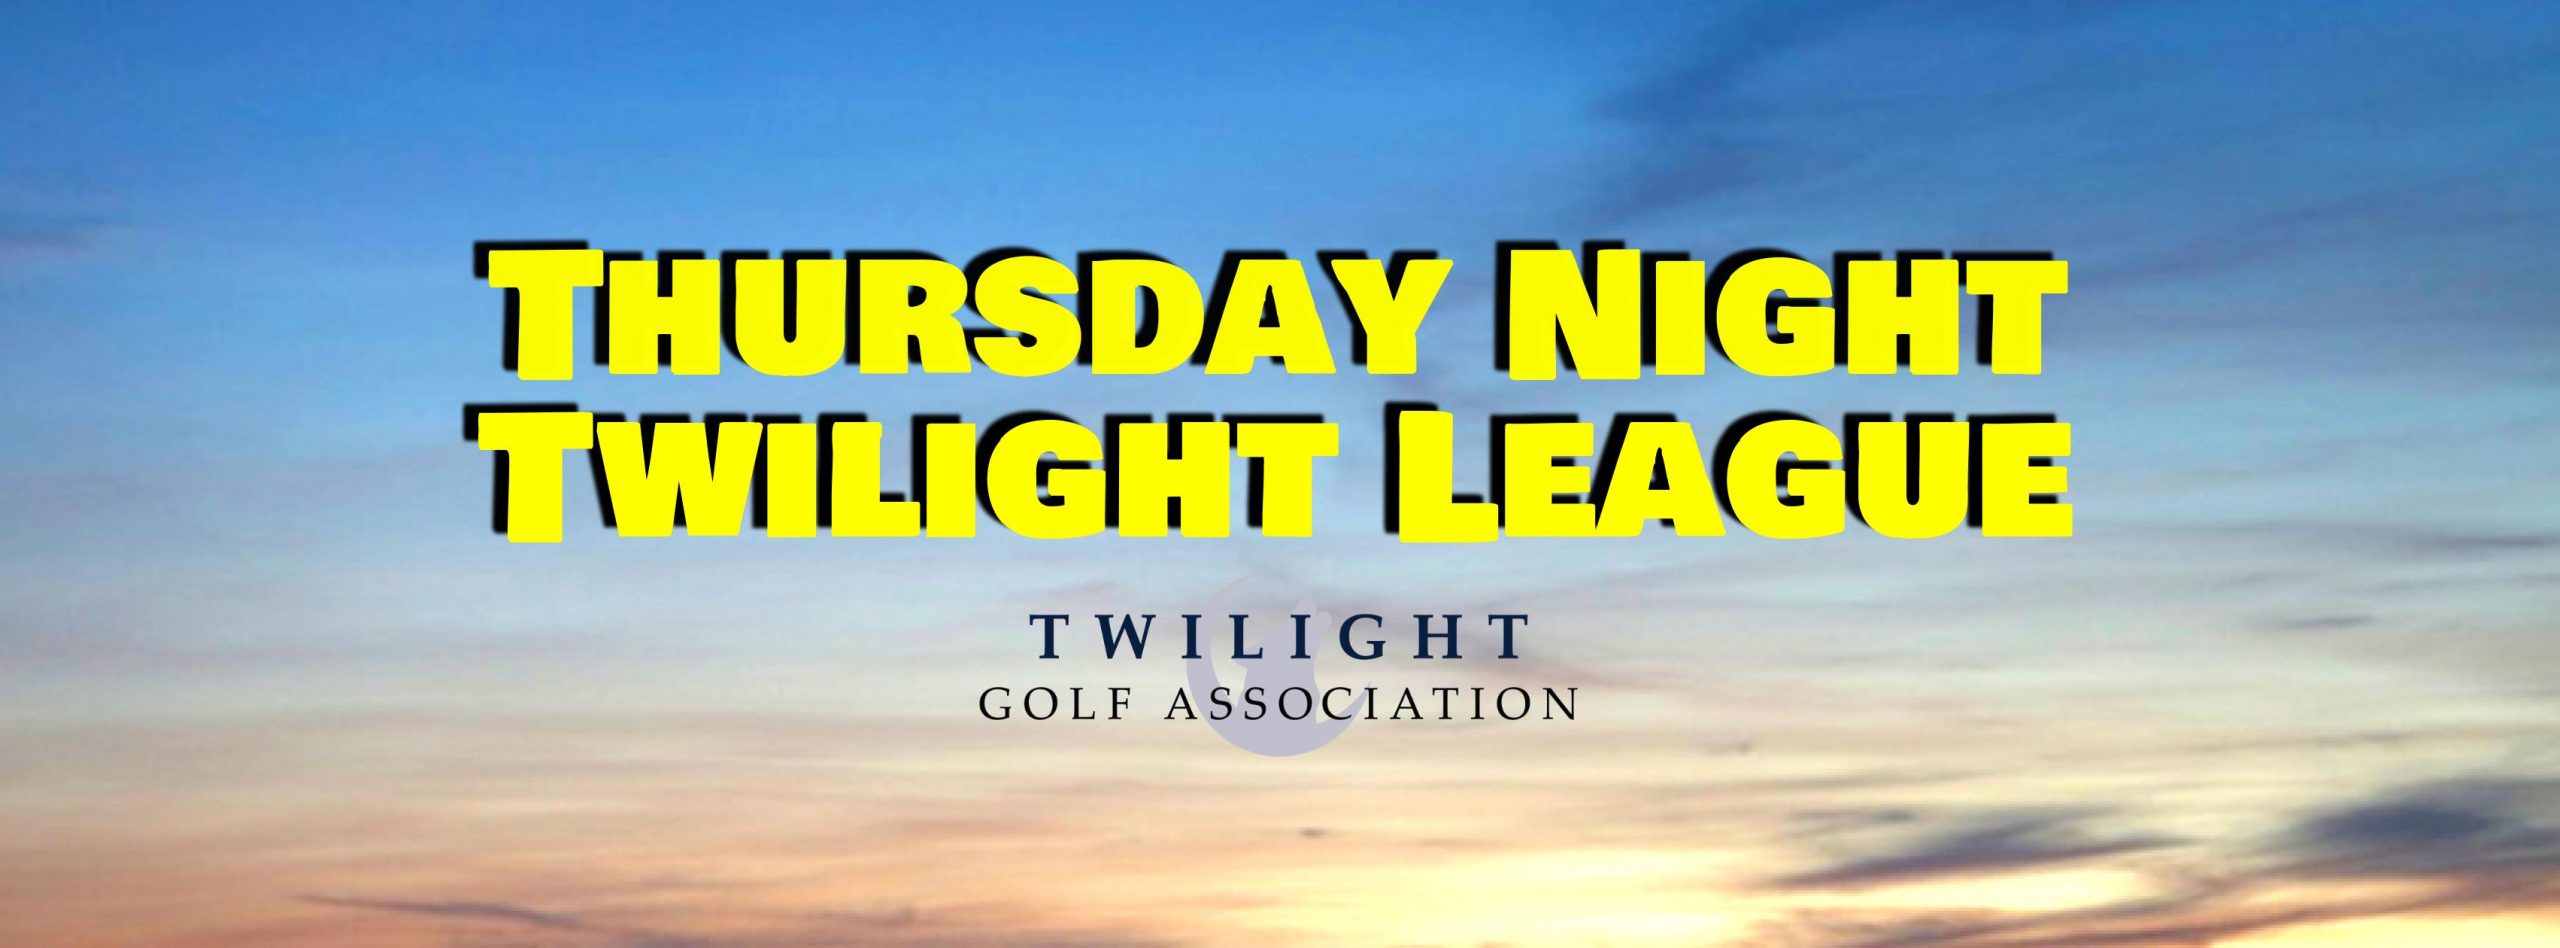 Thursday Twilight League at Westwood Golf Club